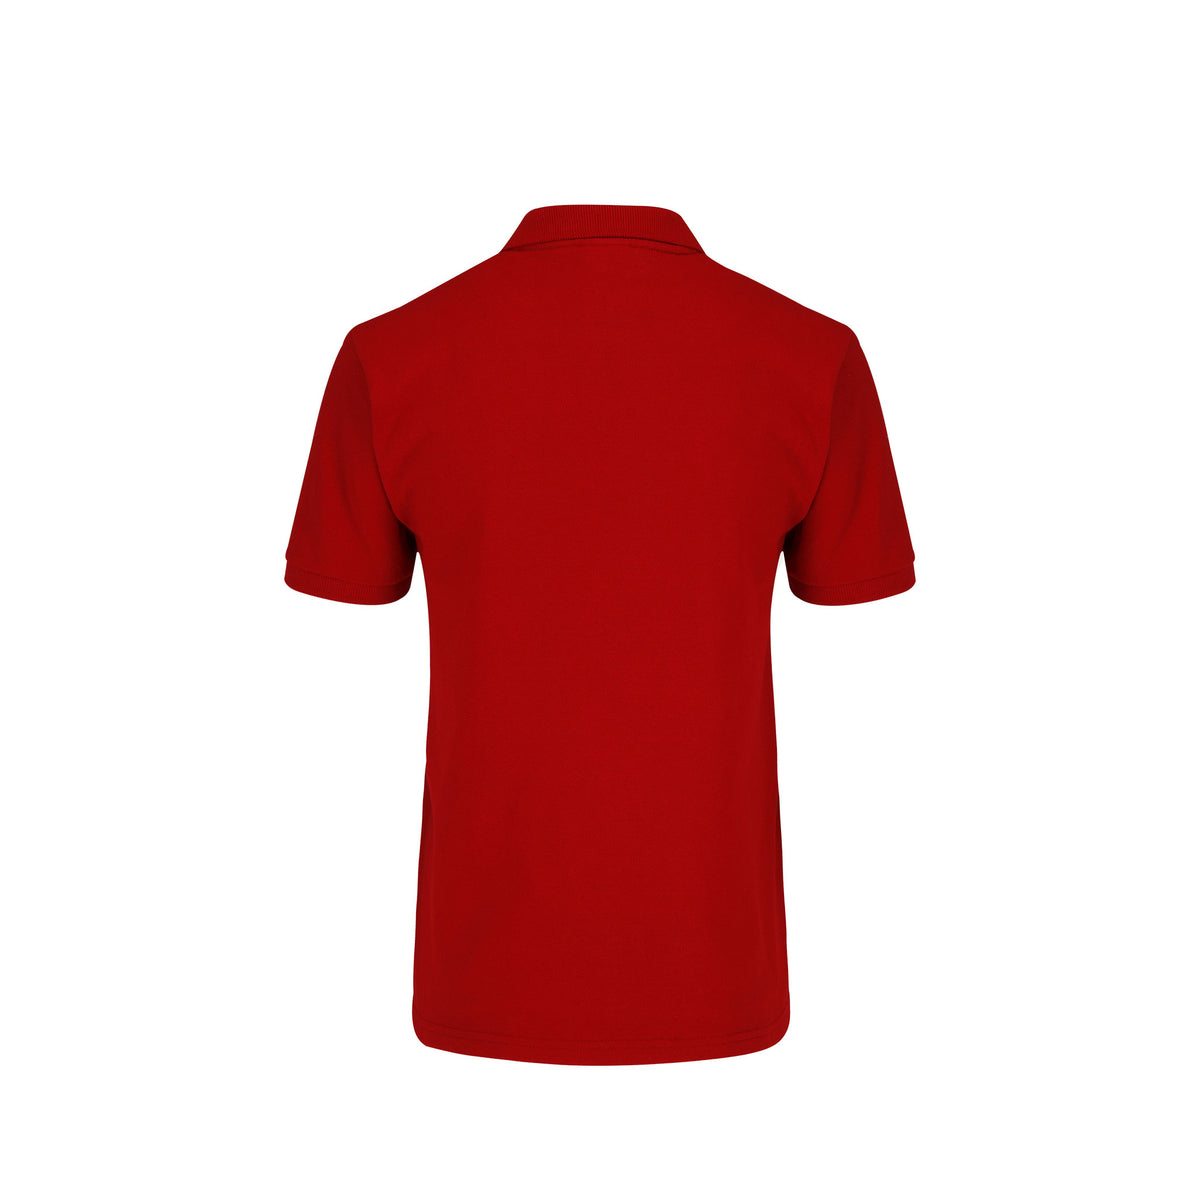 Youth’s Unisex Sport Shirt (Red) – Yazbek USA Mint